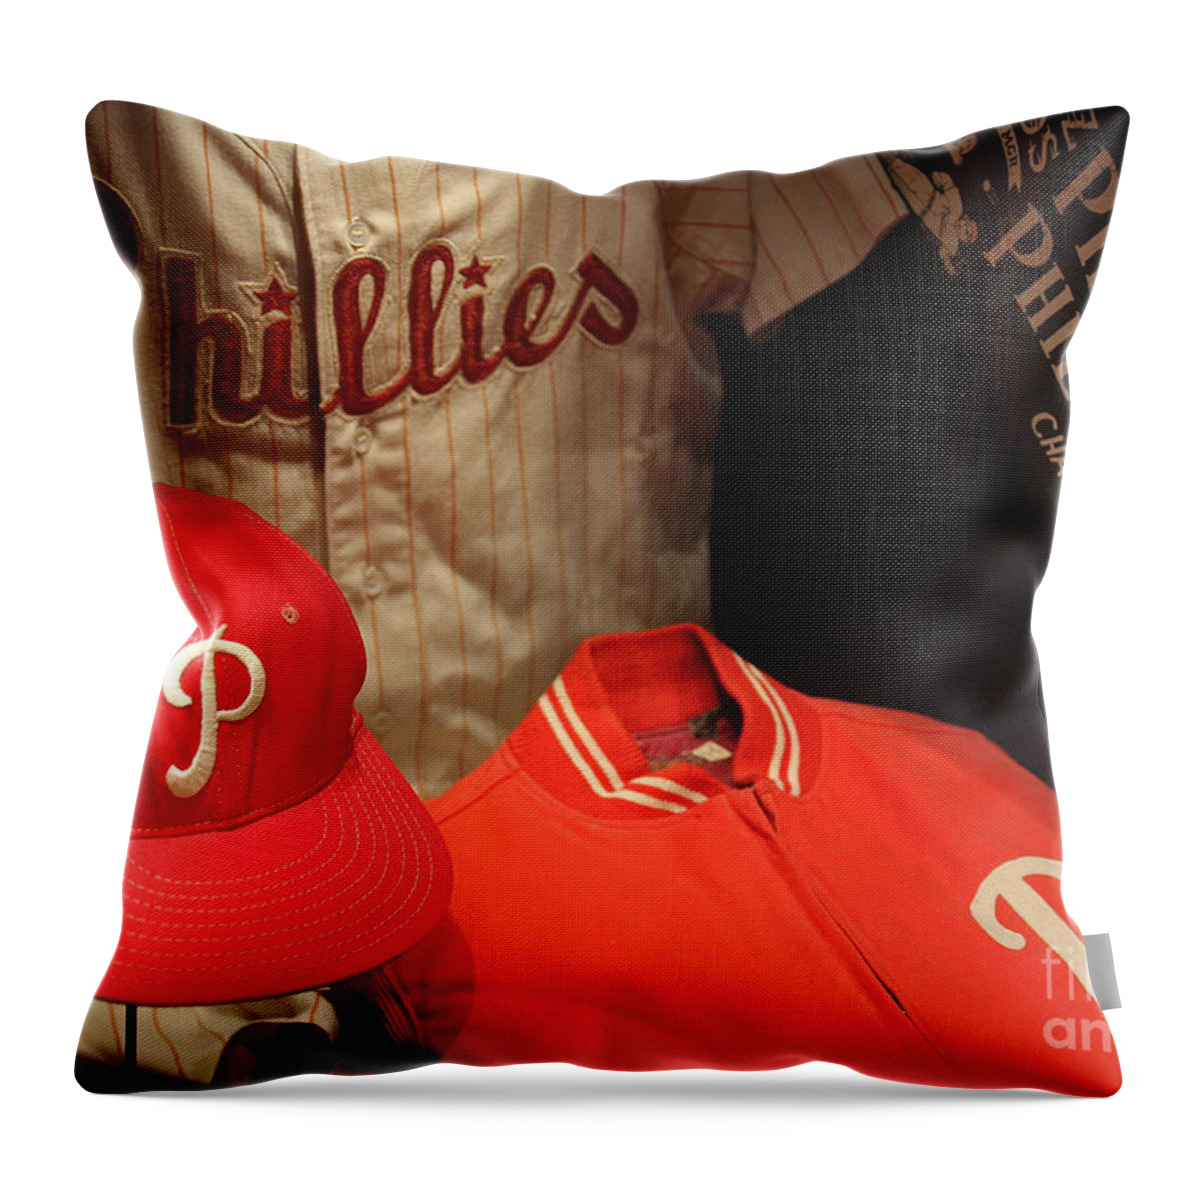 Philadelphia Throw Pillow featuring the photograph Philadelphia Phillies by David Rucker